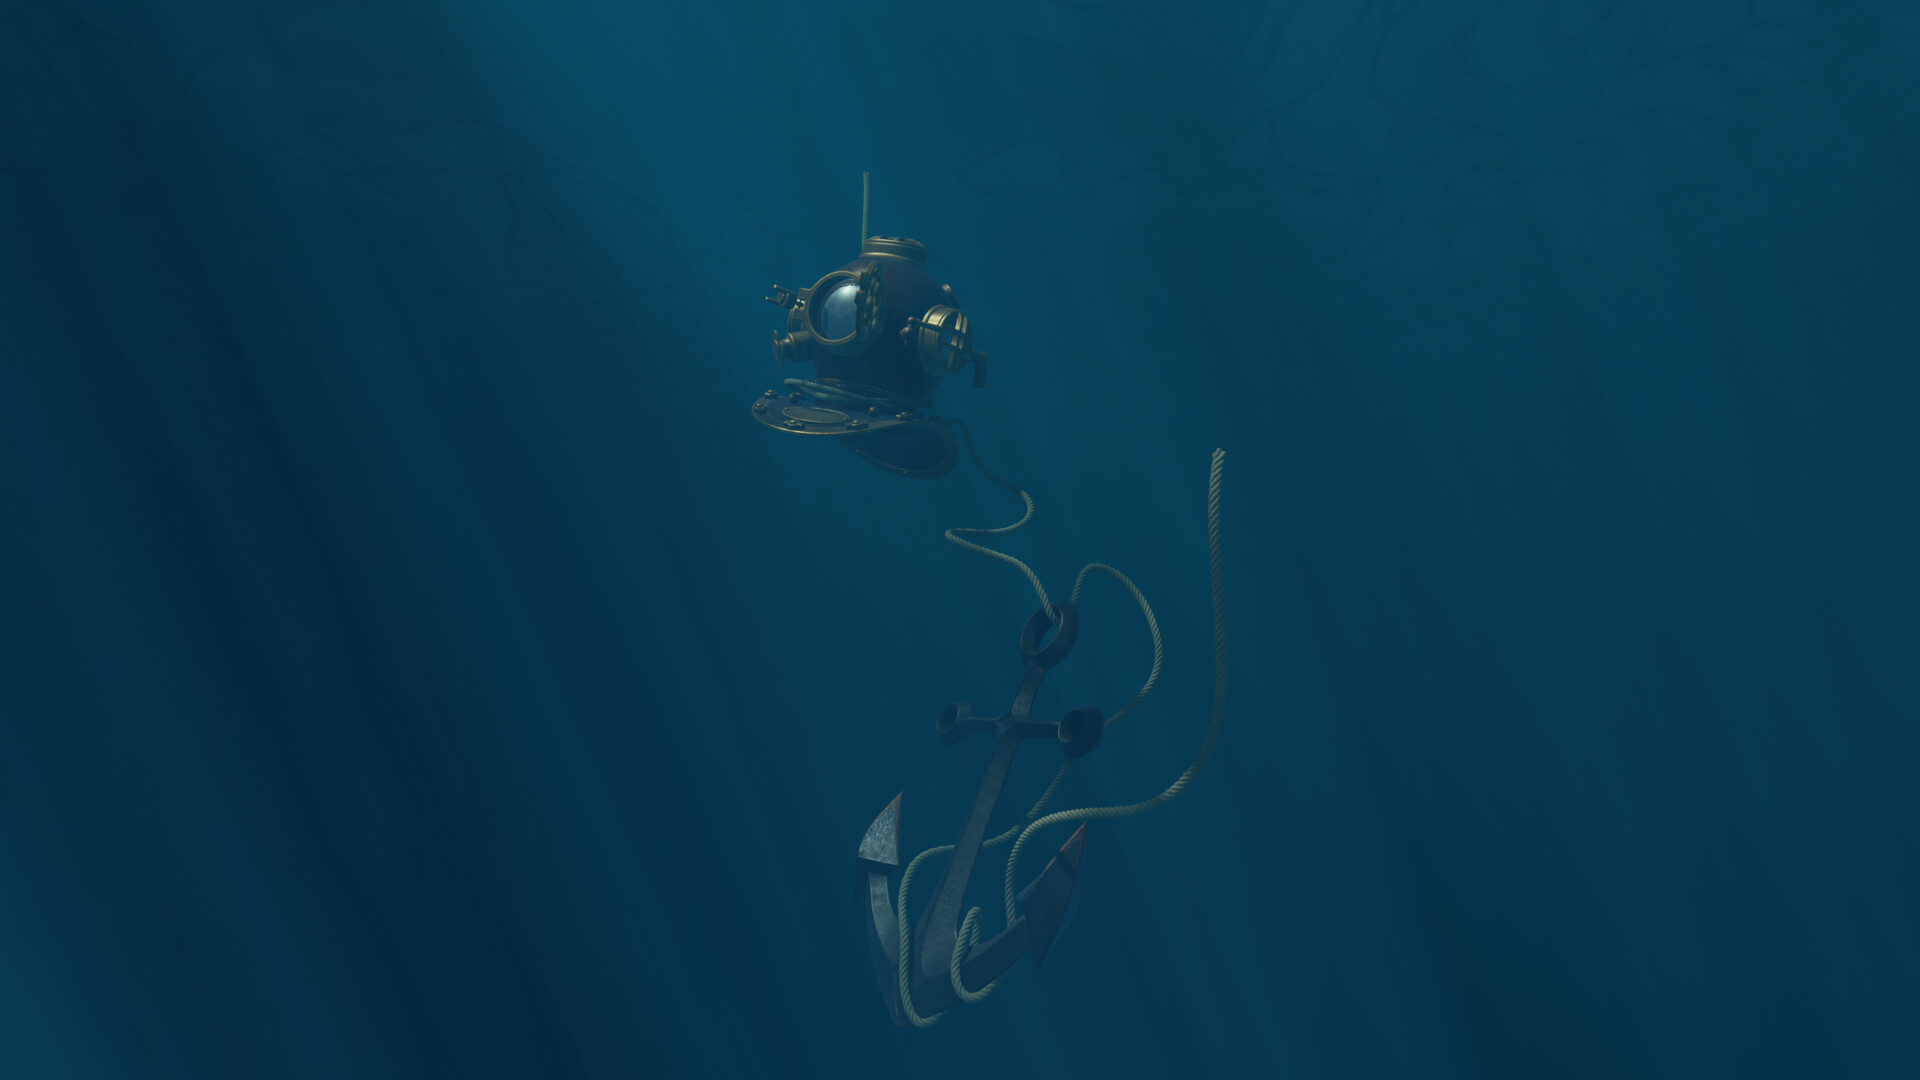 ArtStation - Diving helmet and anchor